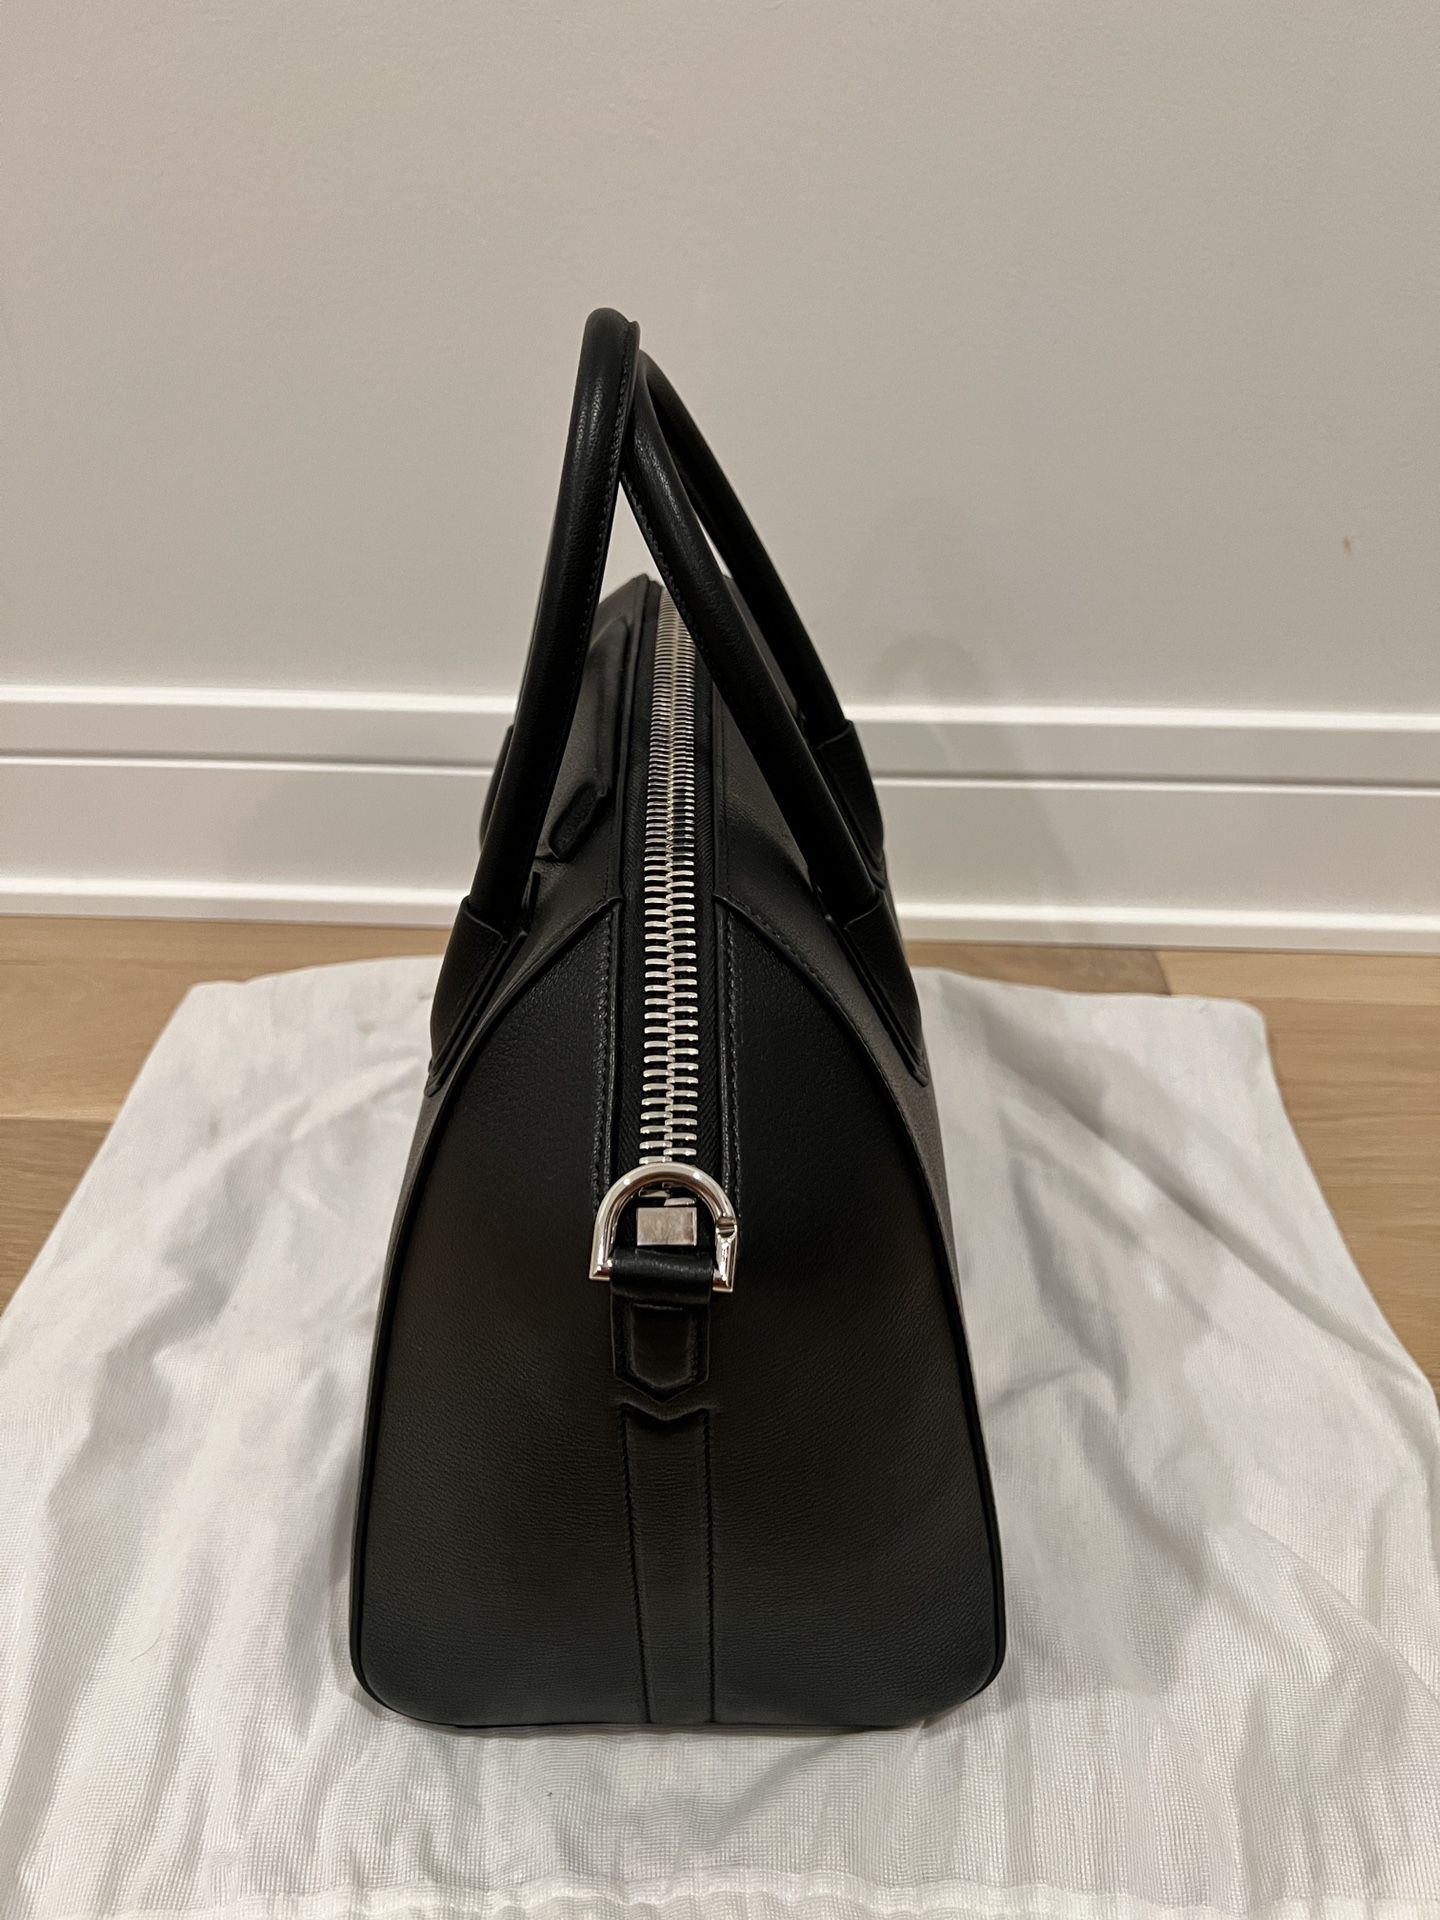 Givenchy Medium Antigona Black Sugar Leather Satchel Purse - New + Receipt